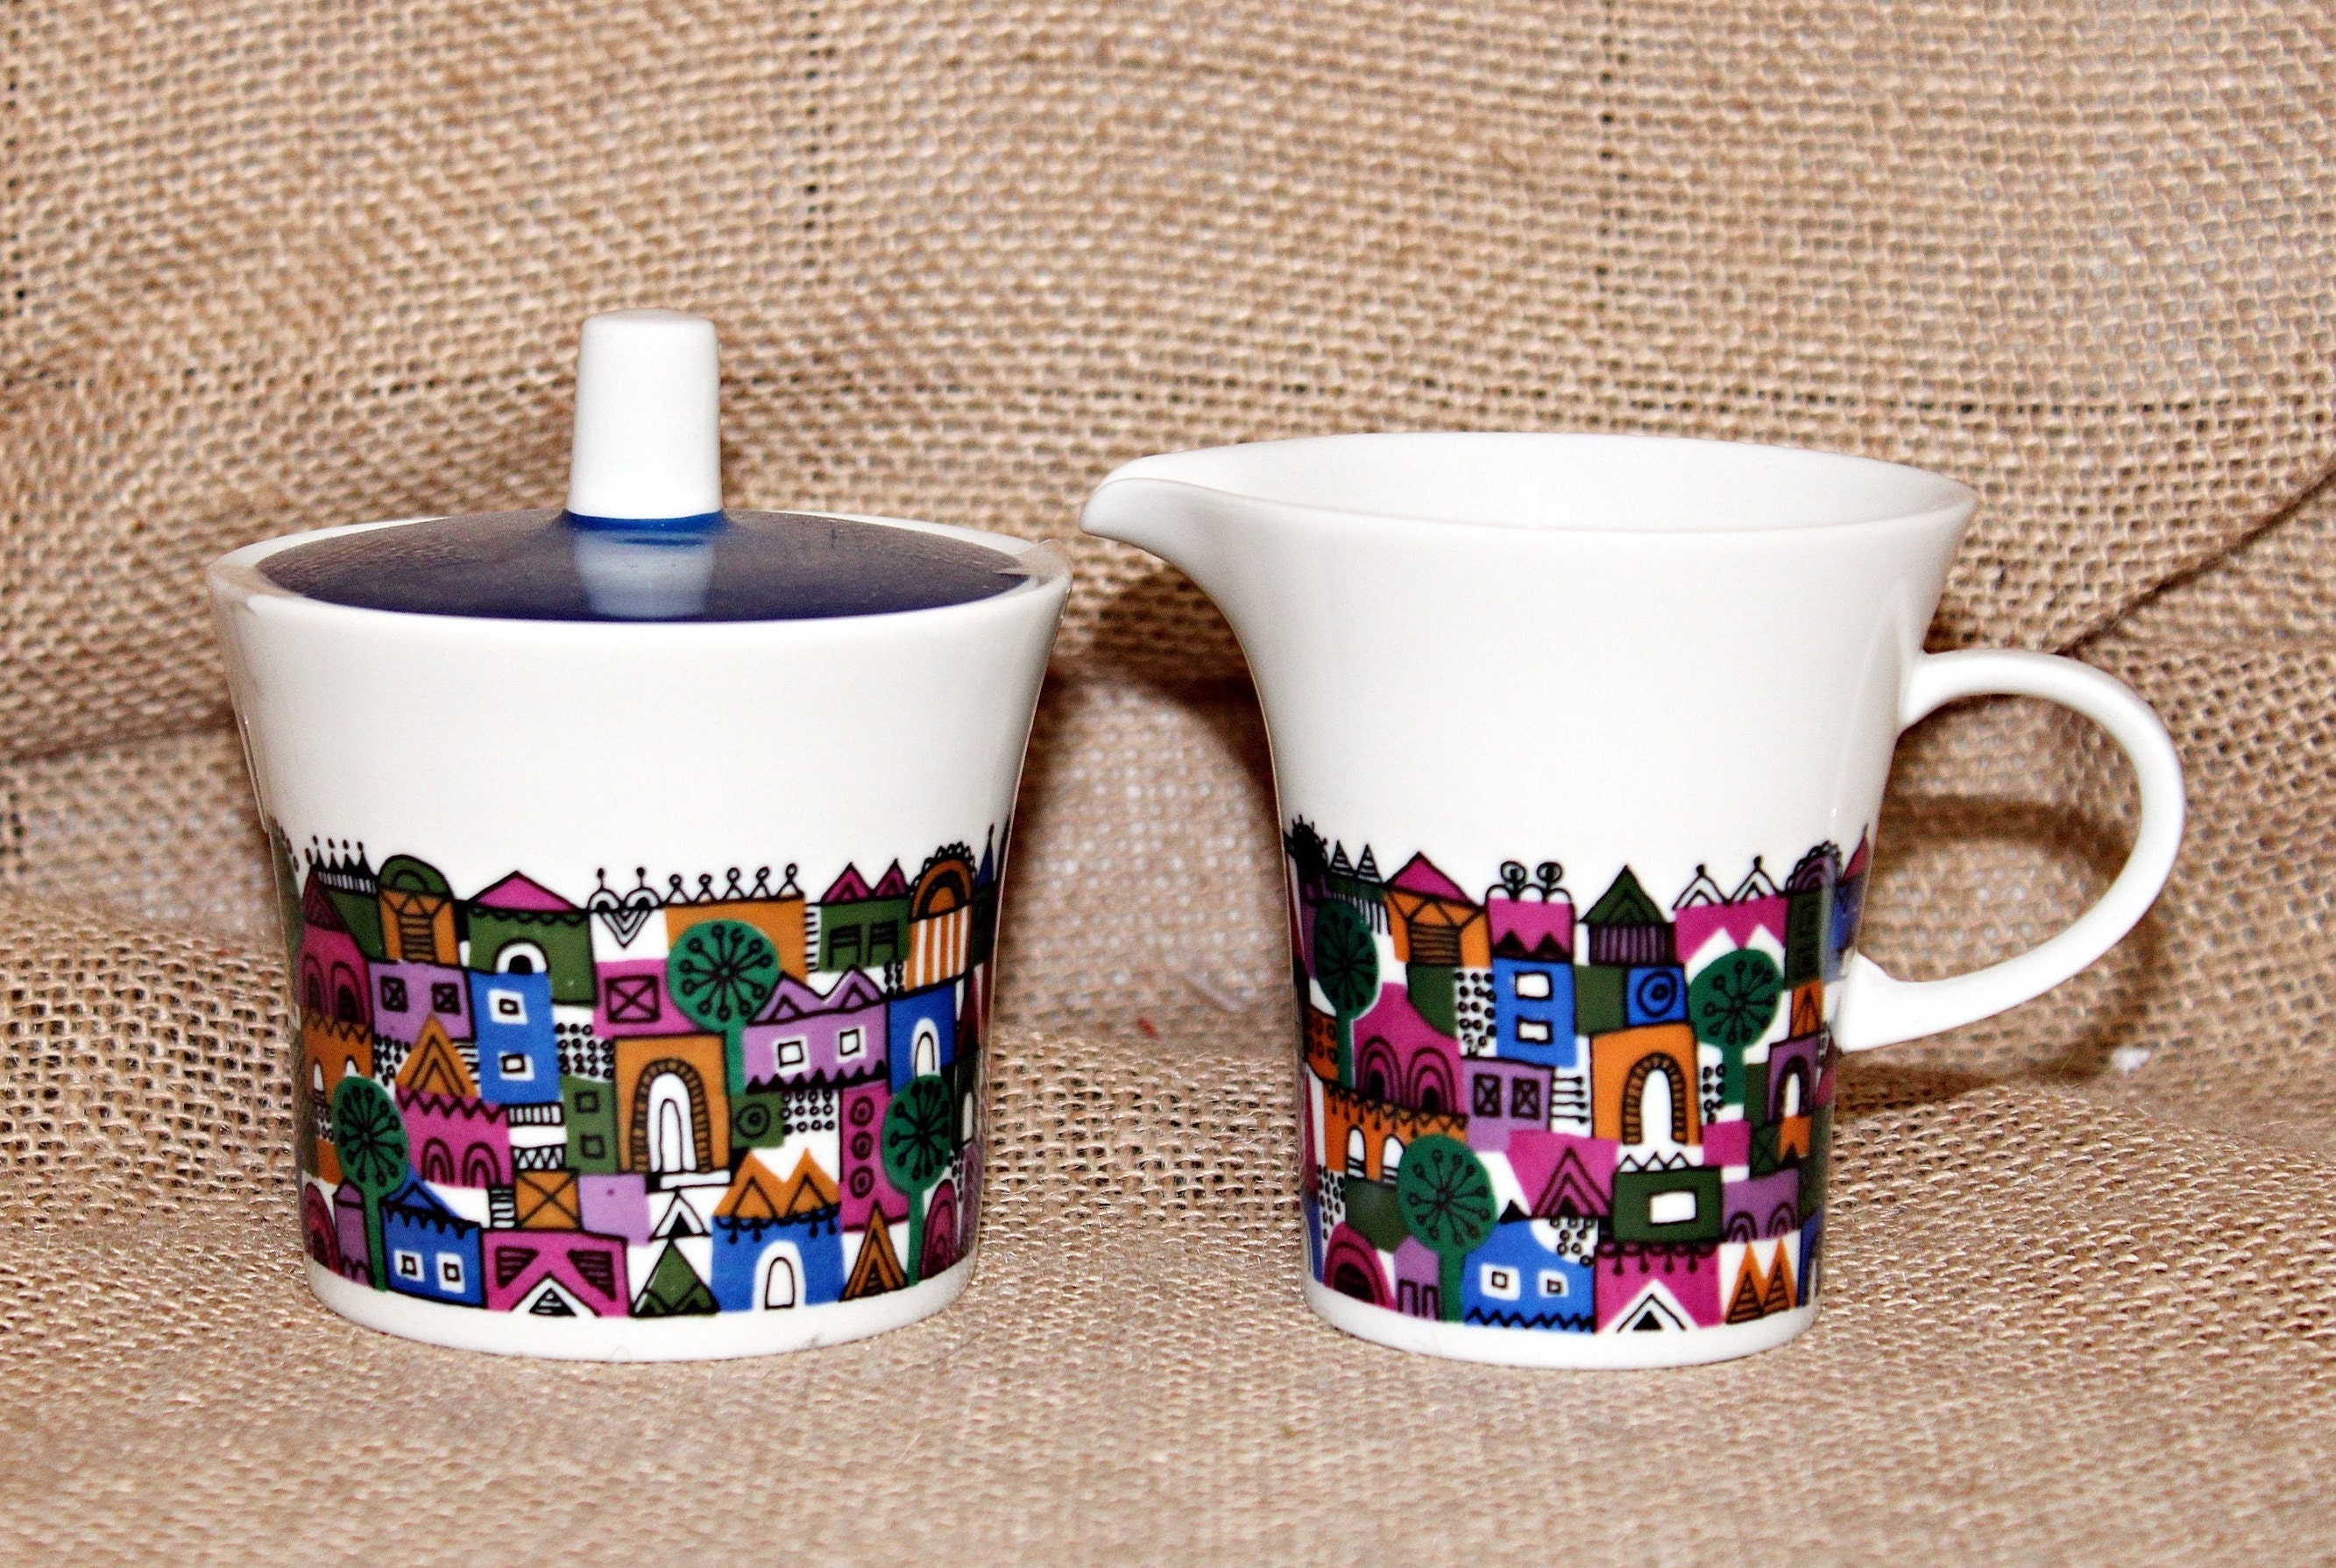 Buy Melitta Coffee Jug Porcelain Online at Best Price in India - Coffeeworkz